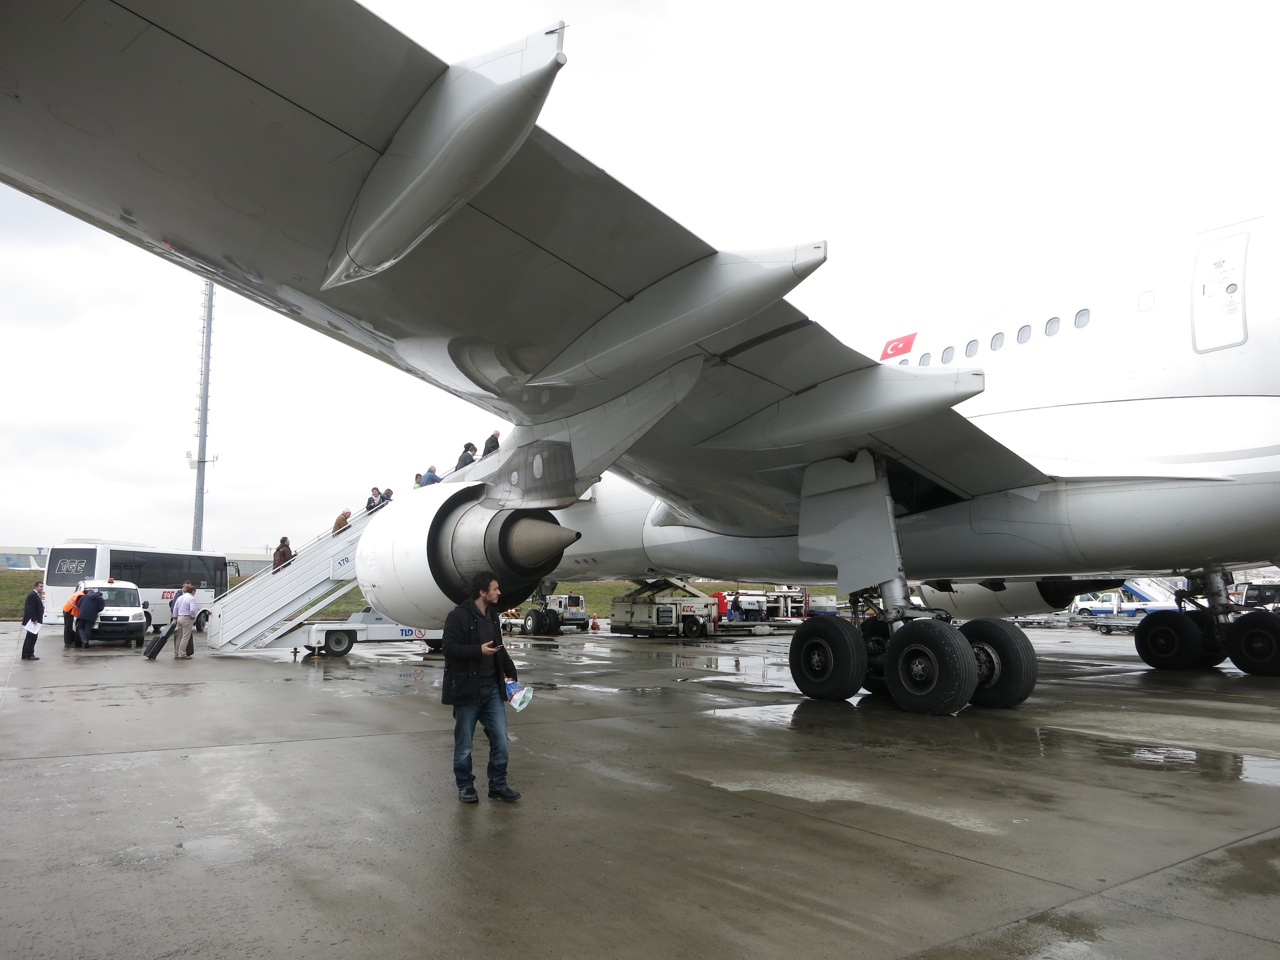 Turkish Airlines Economy class A330, - Jet Airways wet lease, 008.JPG